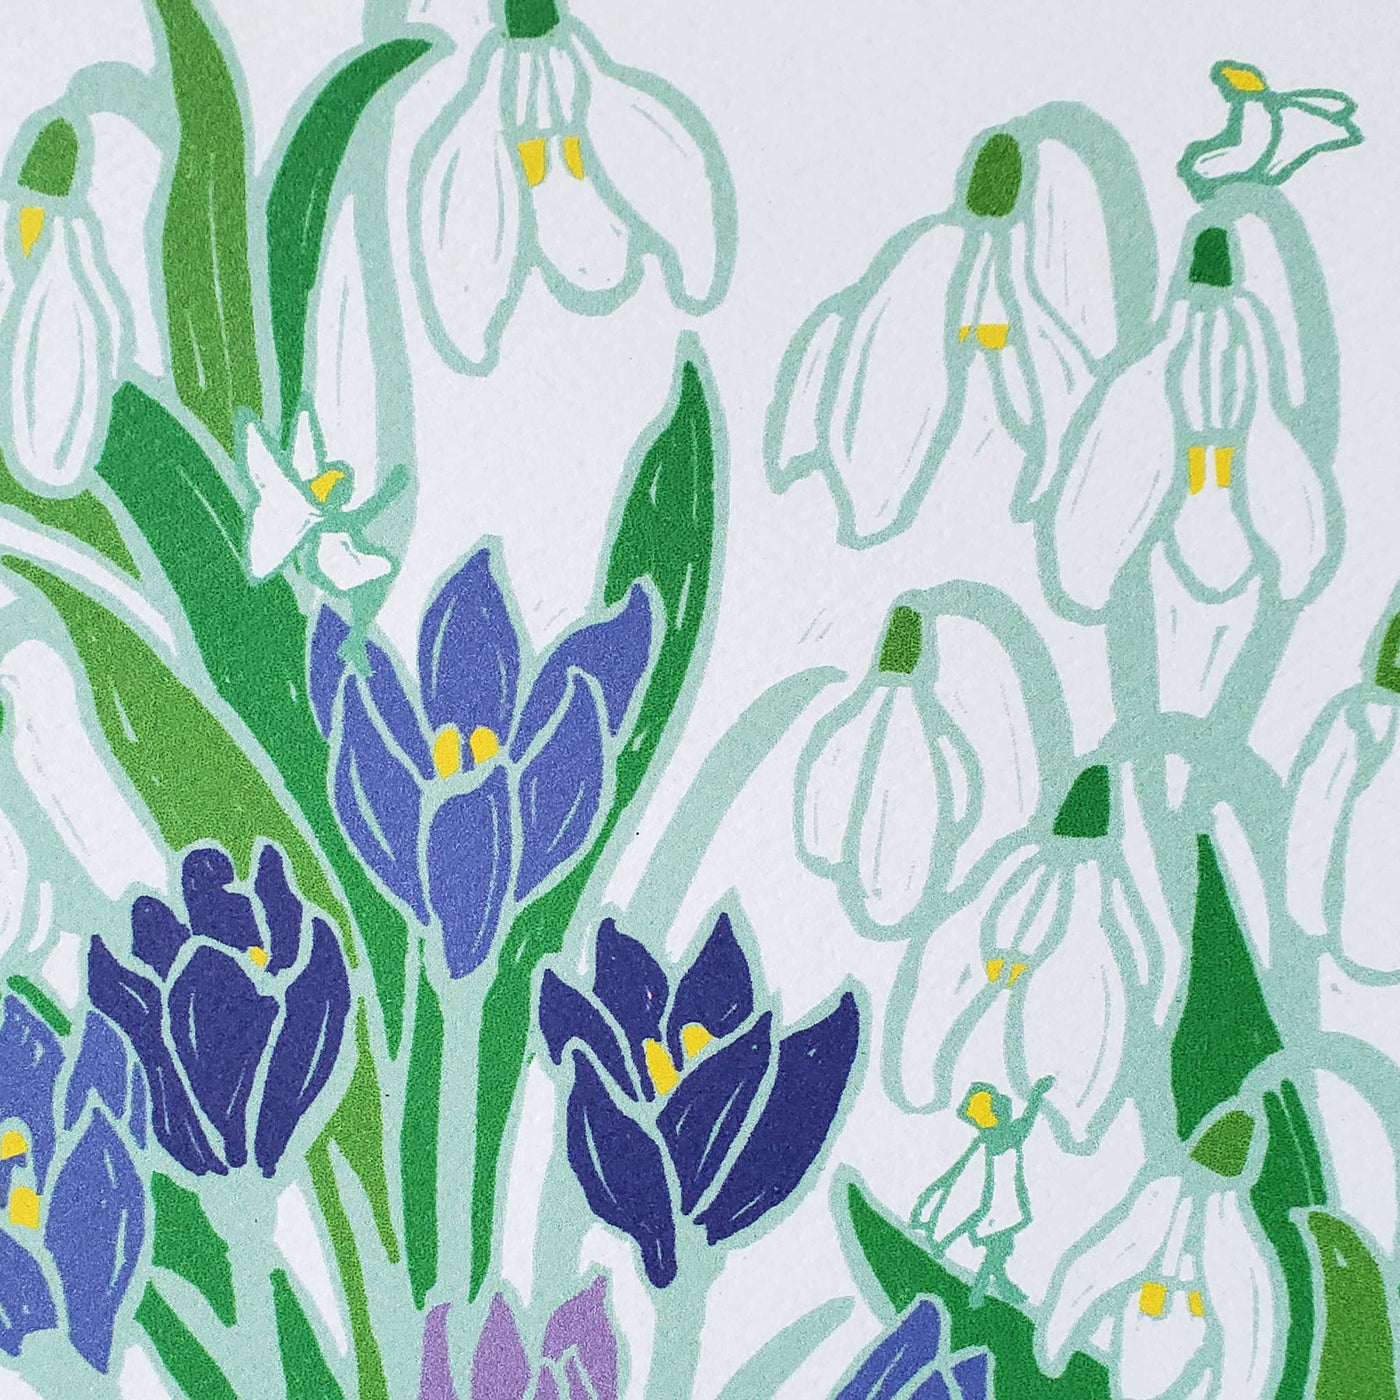 Botanical Snowdrop & Crocus Spring Blank Greeting Card